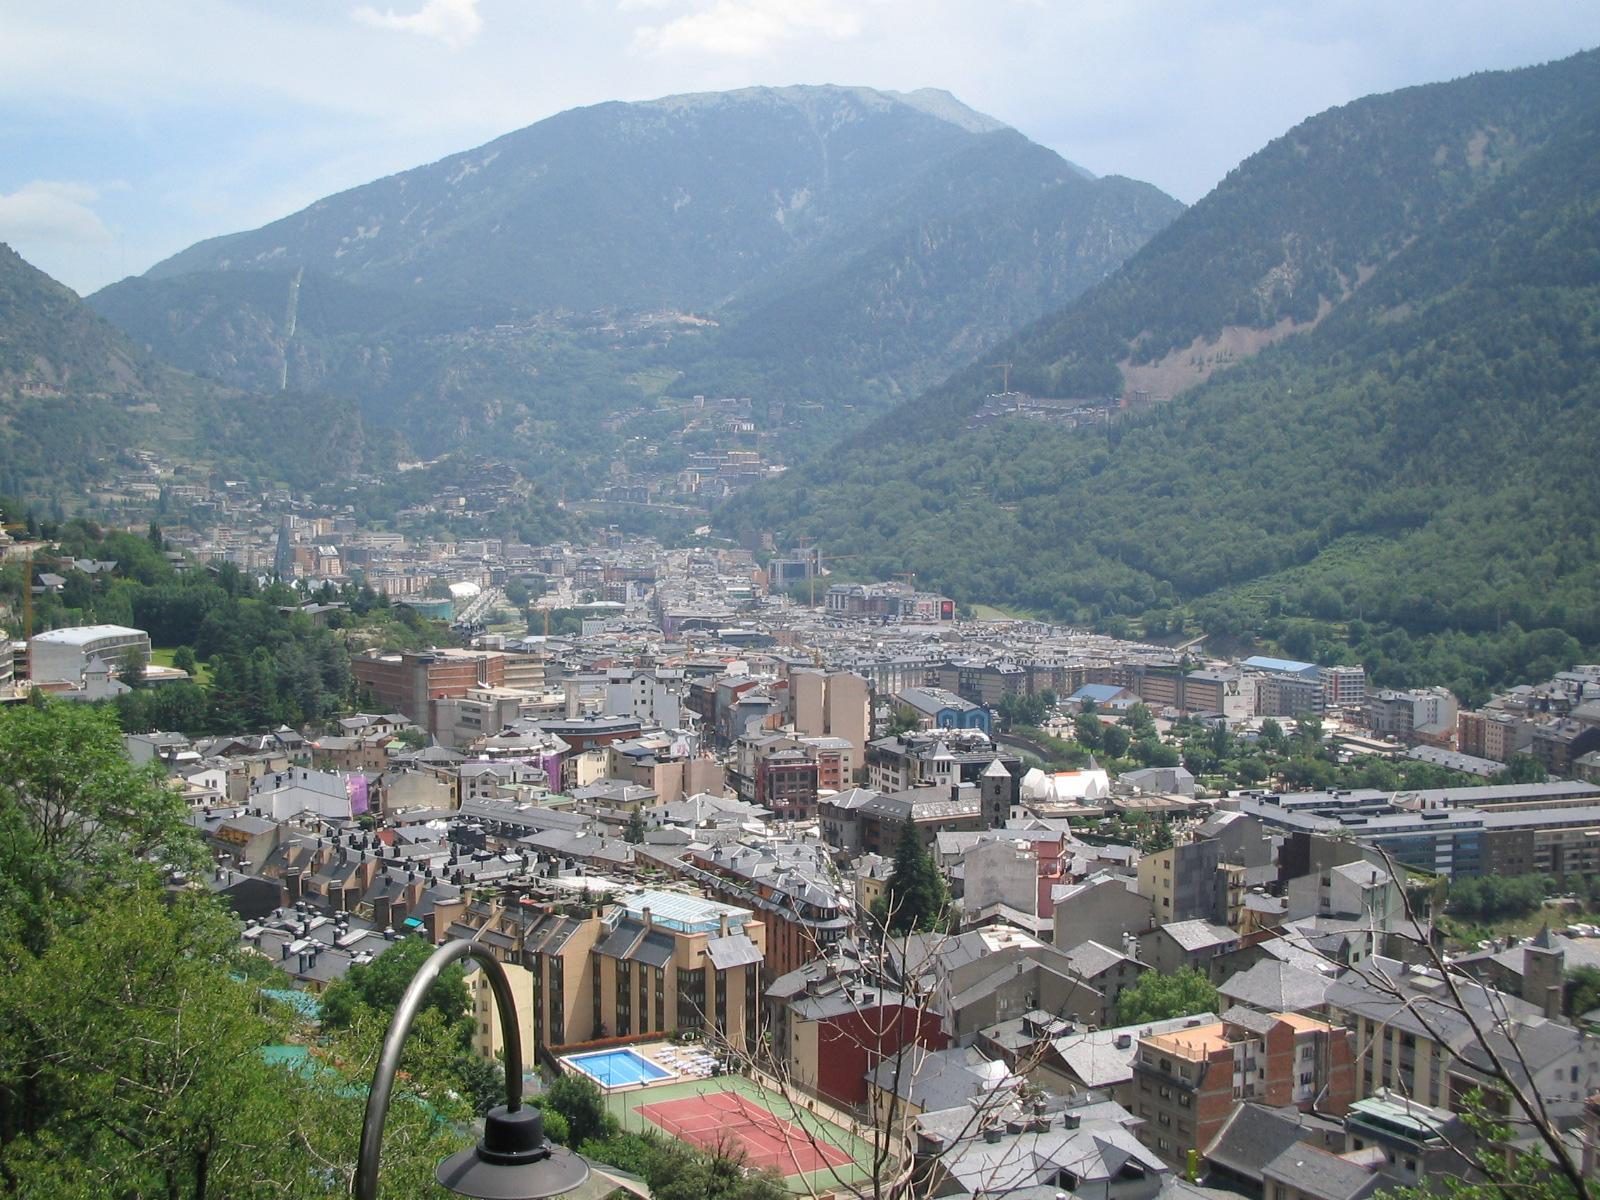 File:Andorra la vella felul